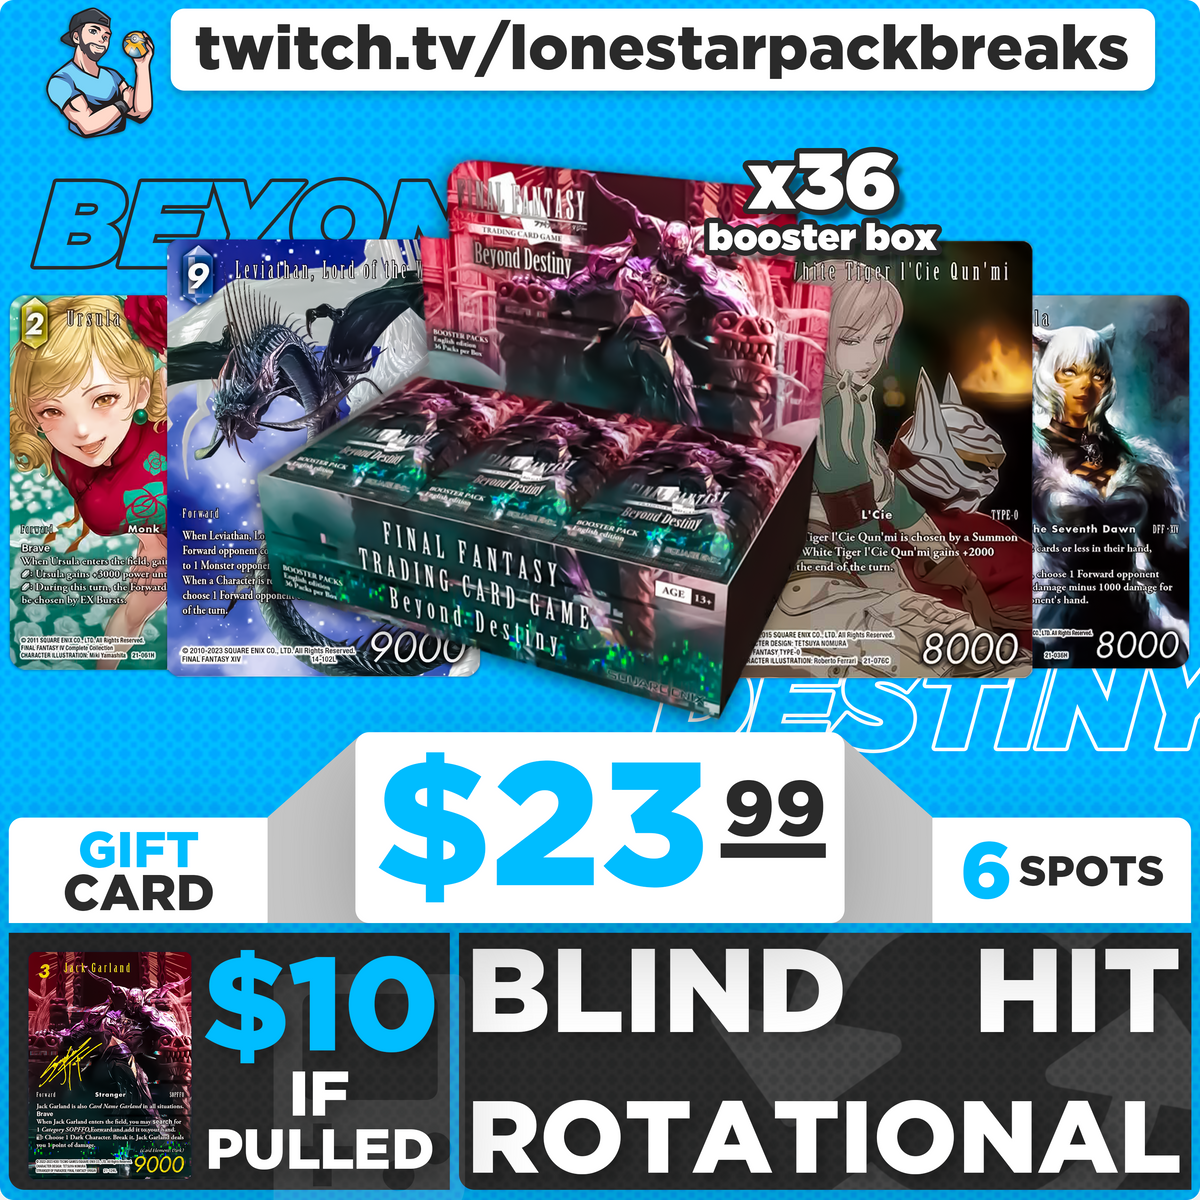 Break #30 Final Fantasy Beyond Destiny 36pk Blind Hit Rotation Fri May 3rd 6PM CST